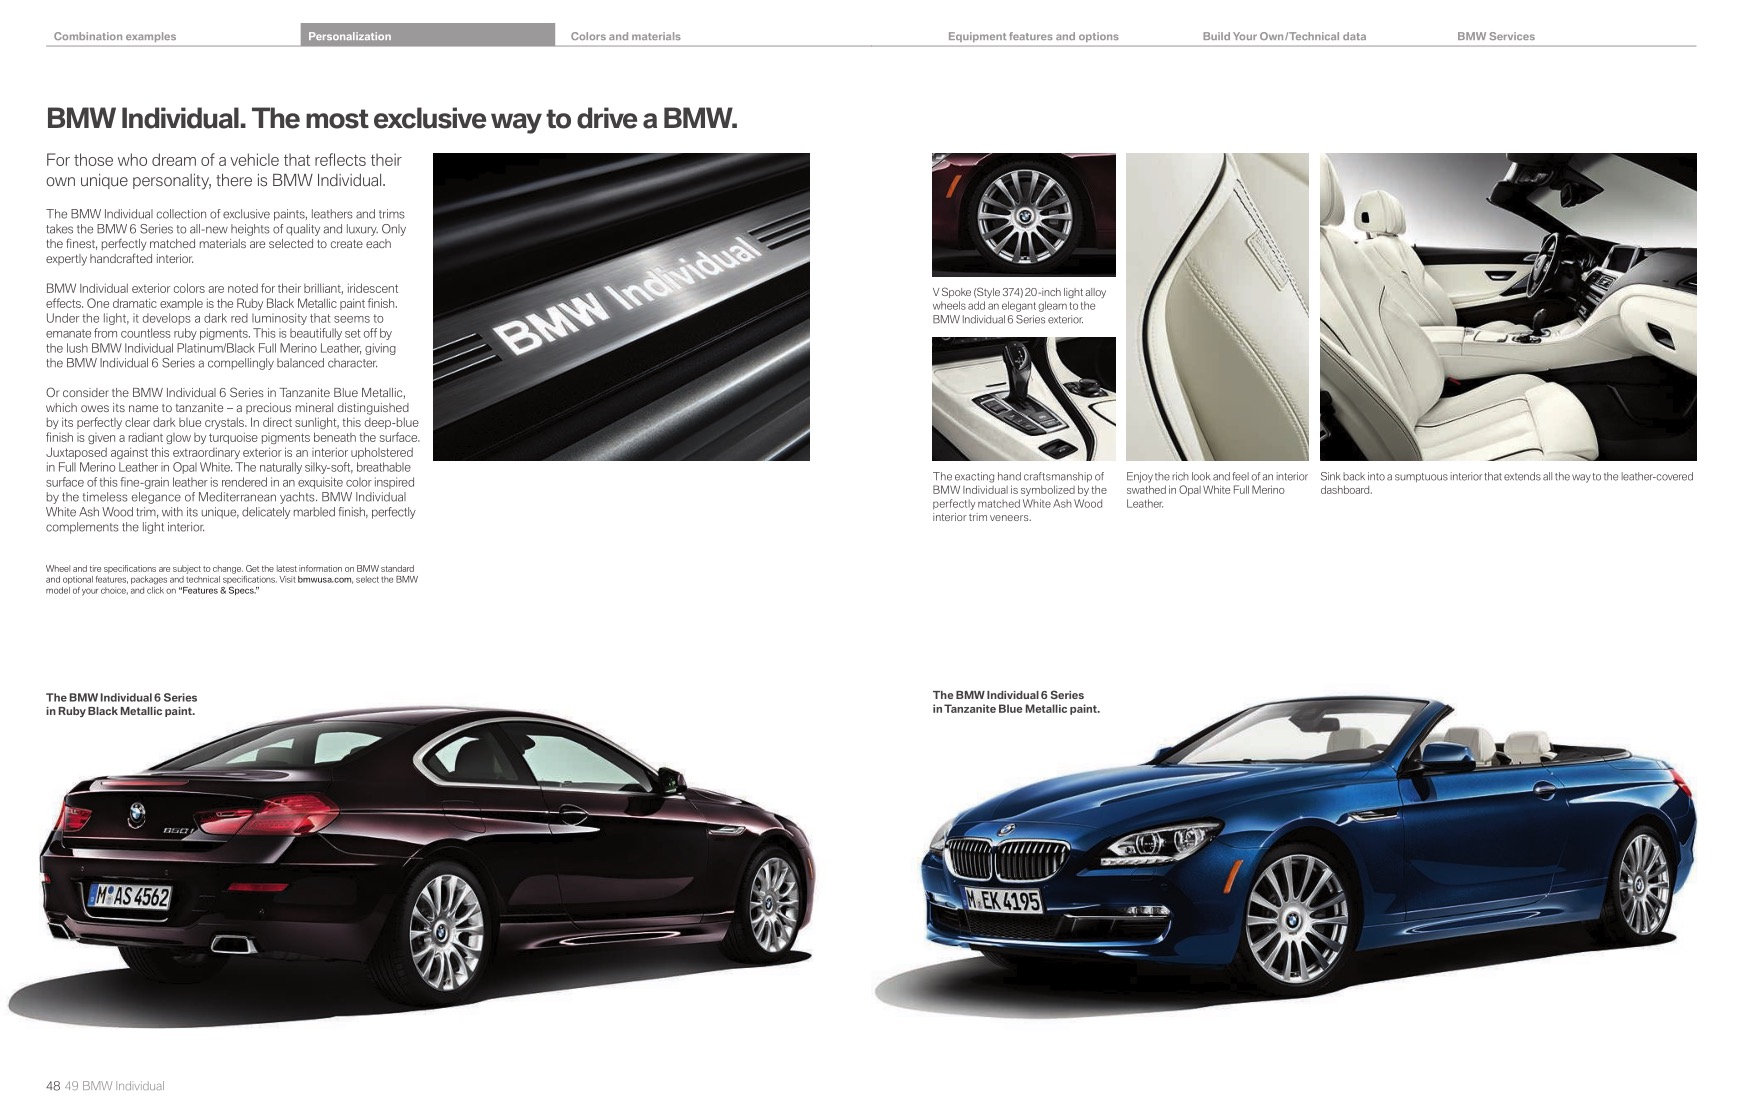 2013 BMW 6-Series Brochure Page 14